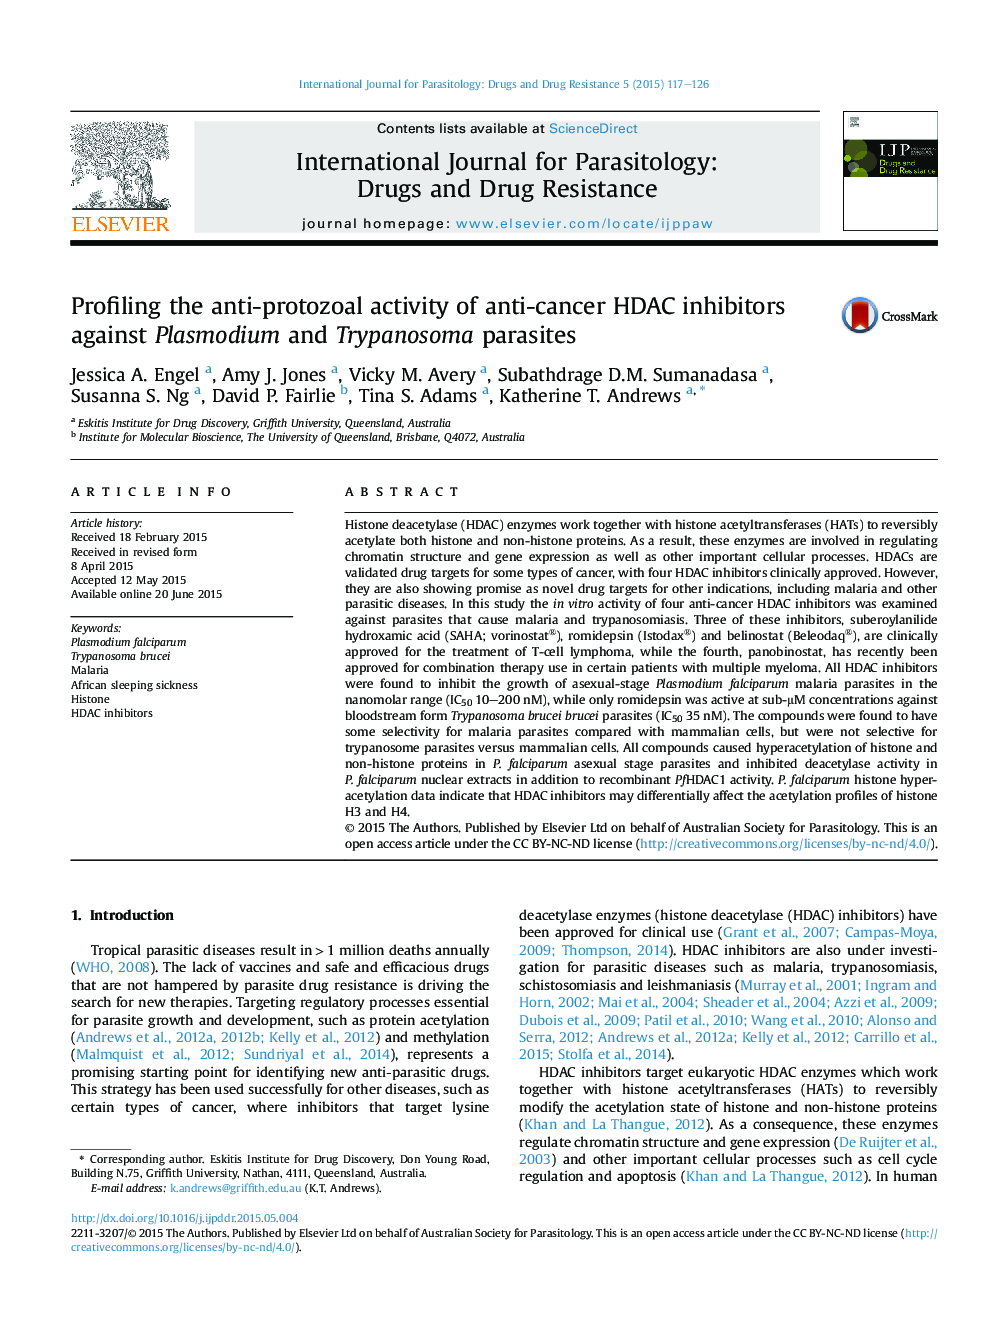 Profiling the anti-protozoal activity of anti-cancer HDAC inhibitors against Plasmodium and Trypanosoma parasites